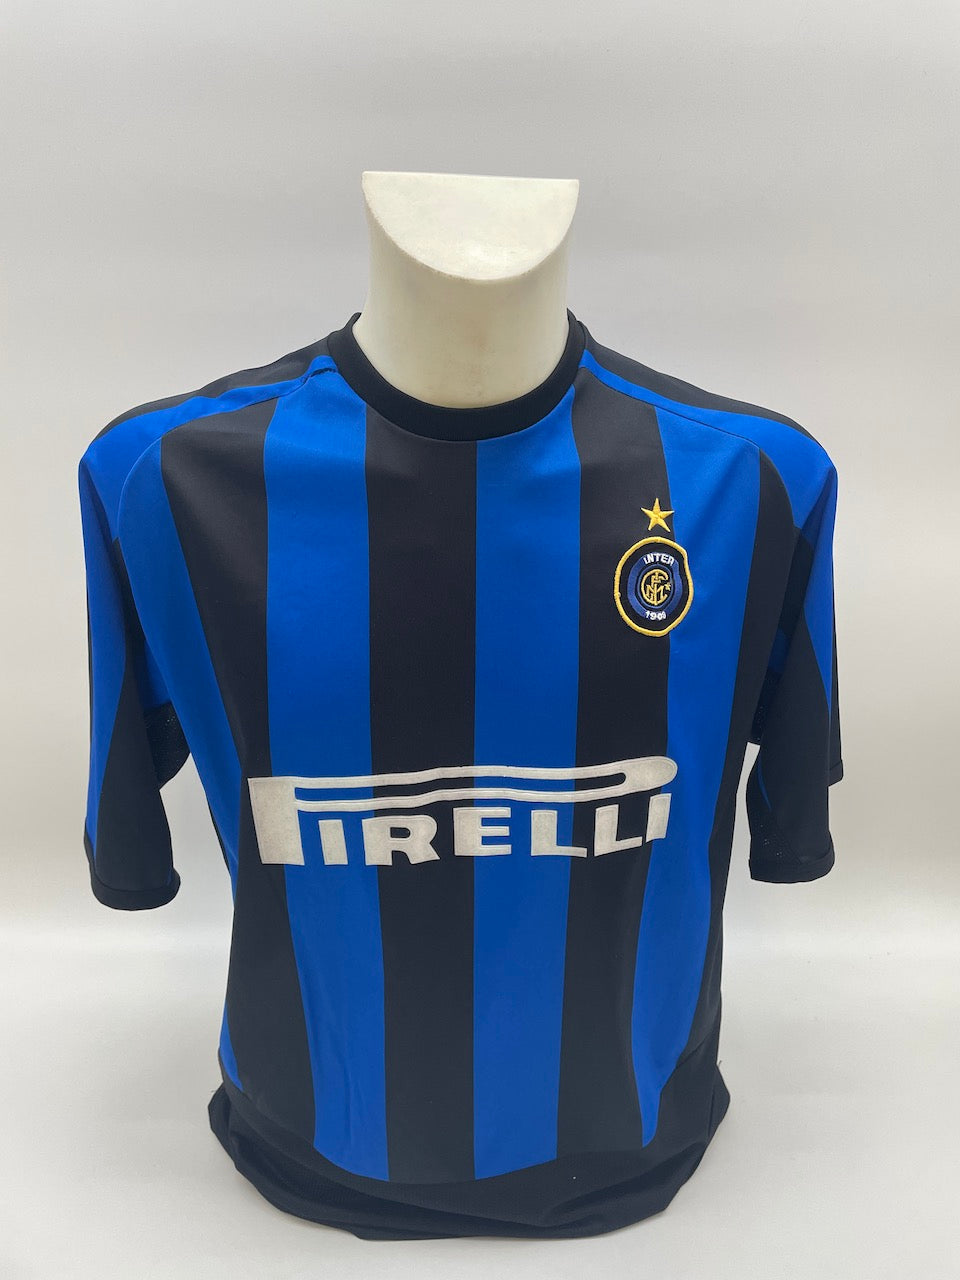 Inter Mailand Shirt Emre Belözoglu signiert Italien Milan Autogramm Fußball M